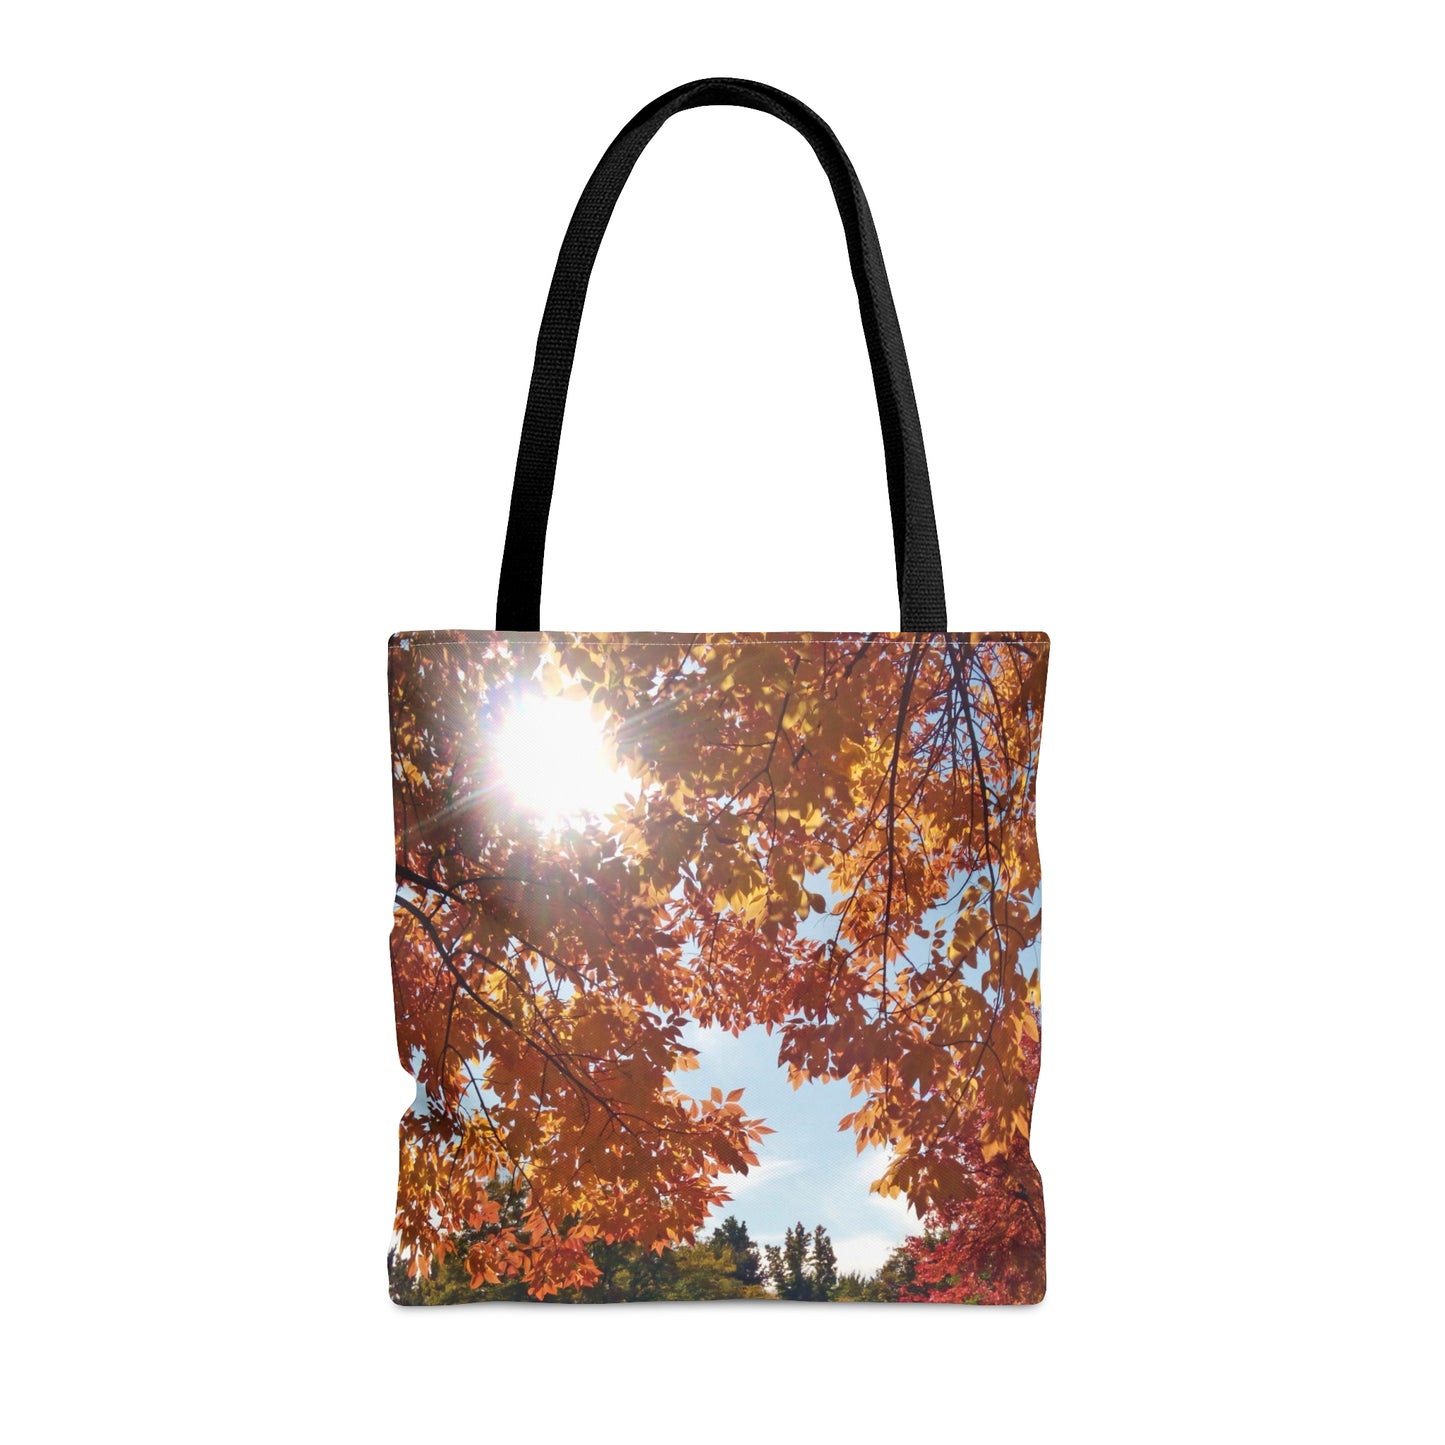 Autumn Light Tote Bag